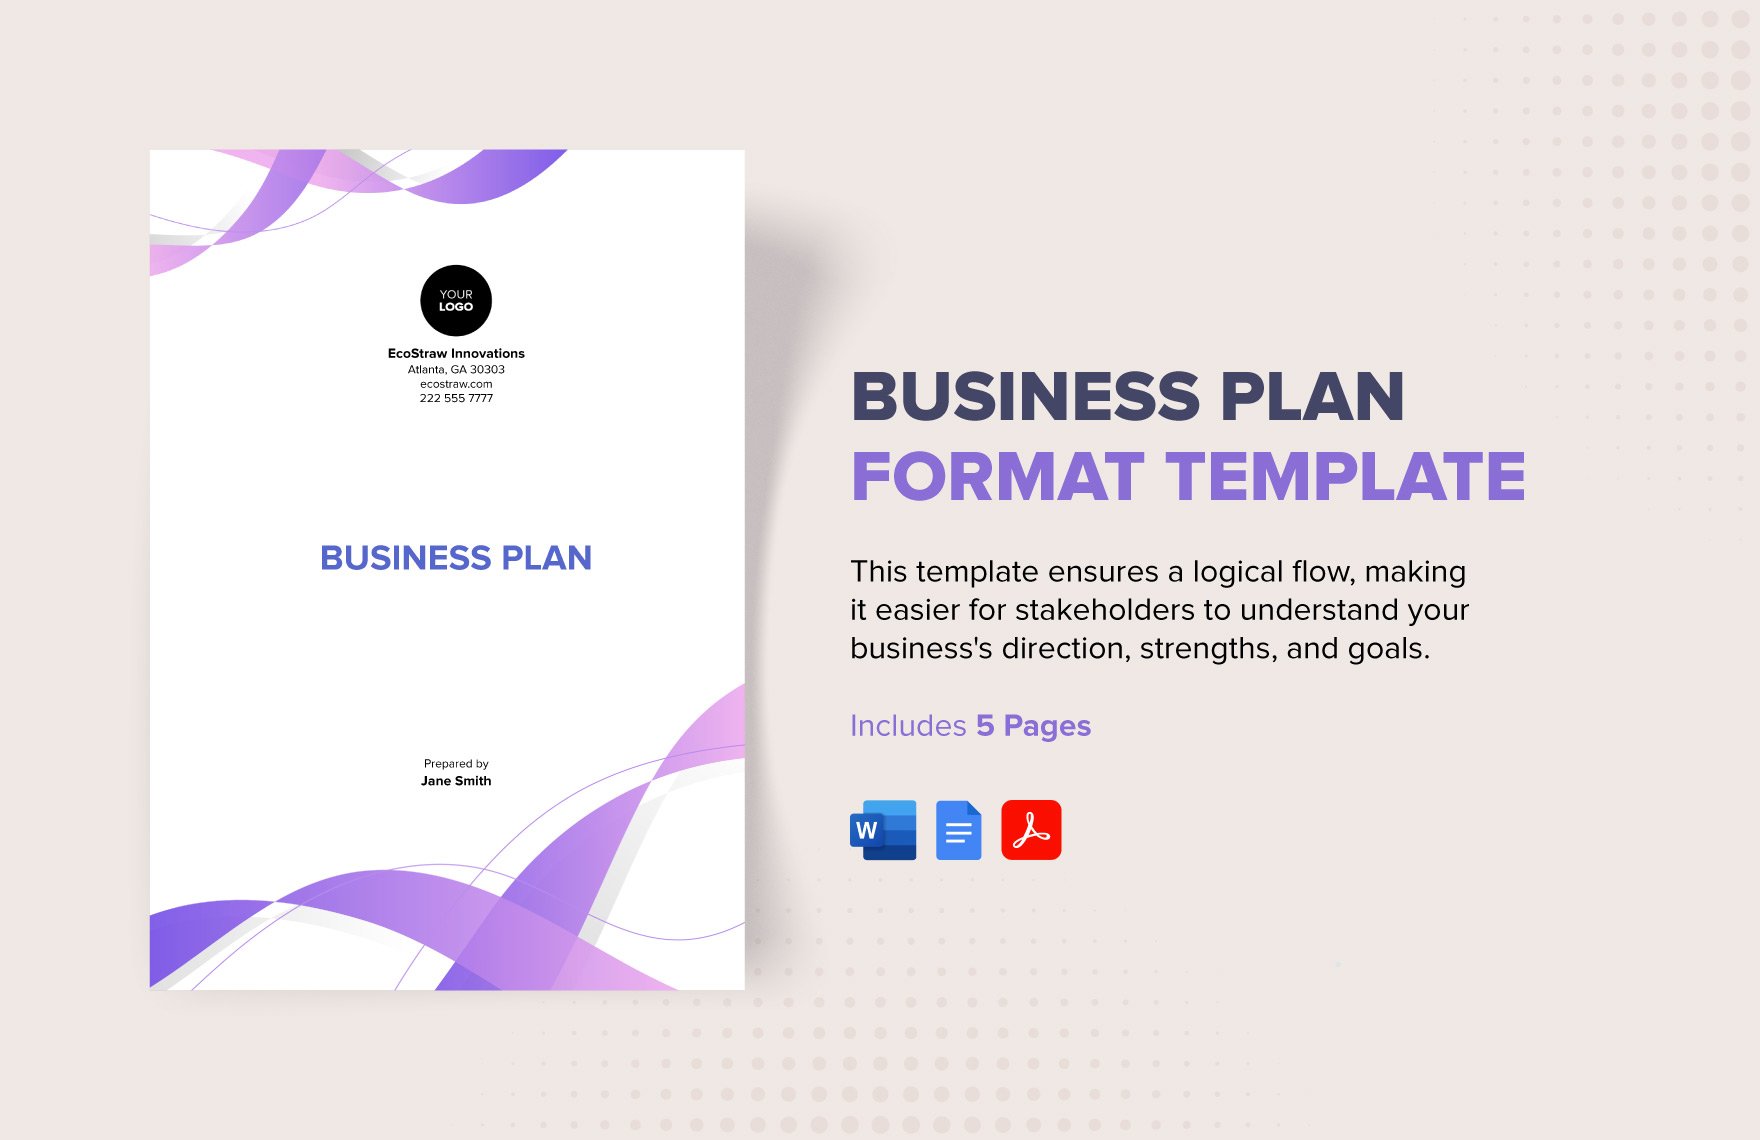 Business Plan Format Template